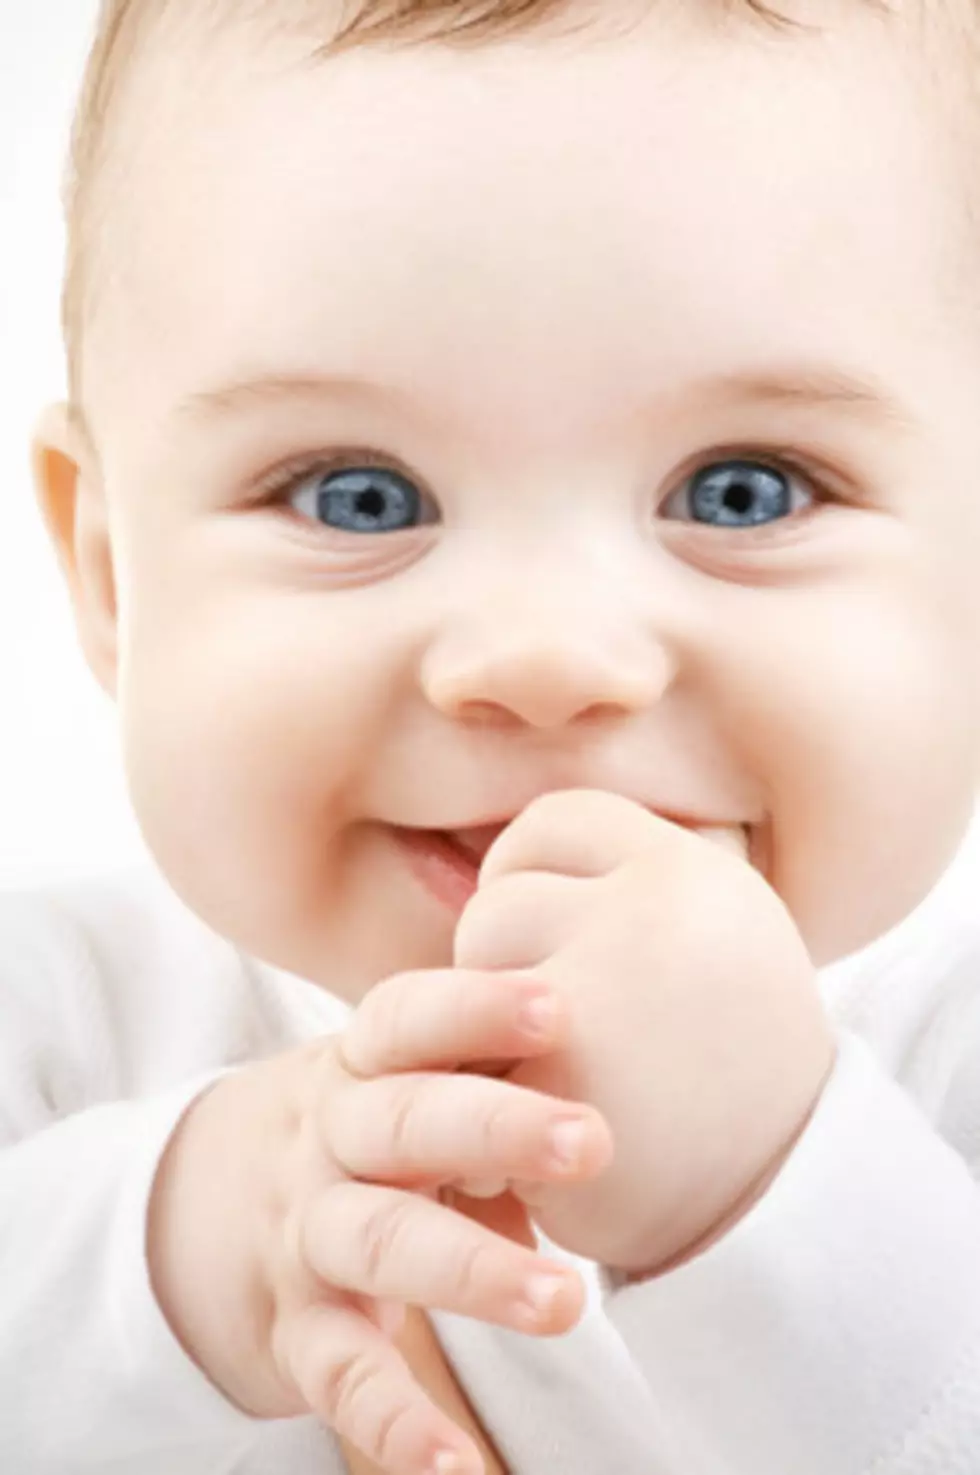 This Baby Speaks His Mind (VIDEO)